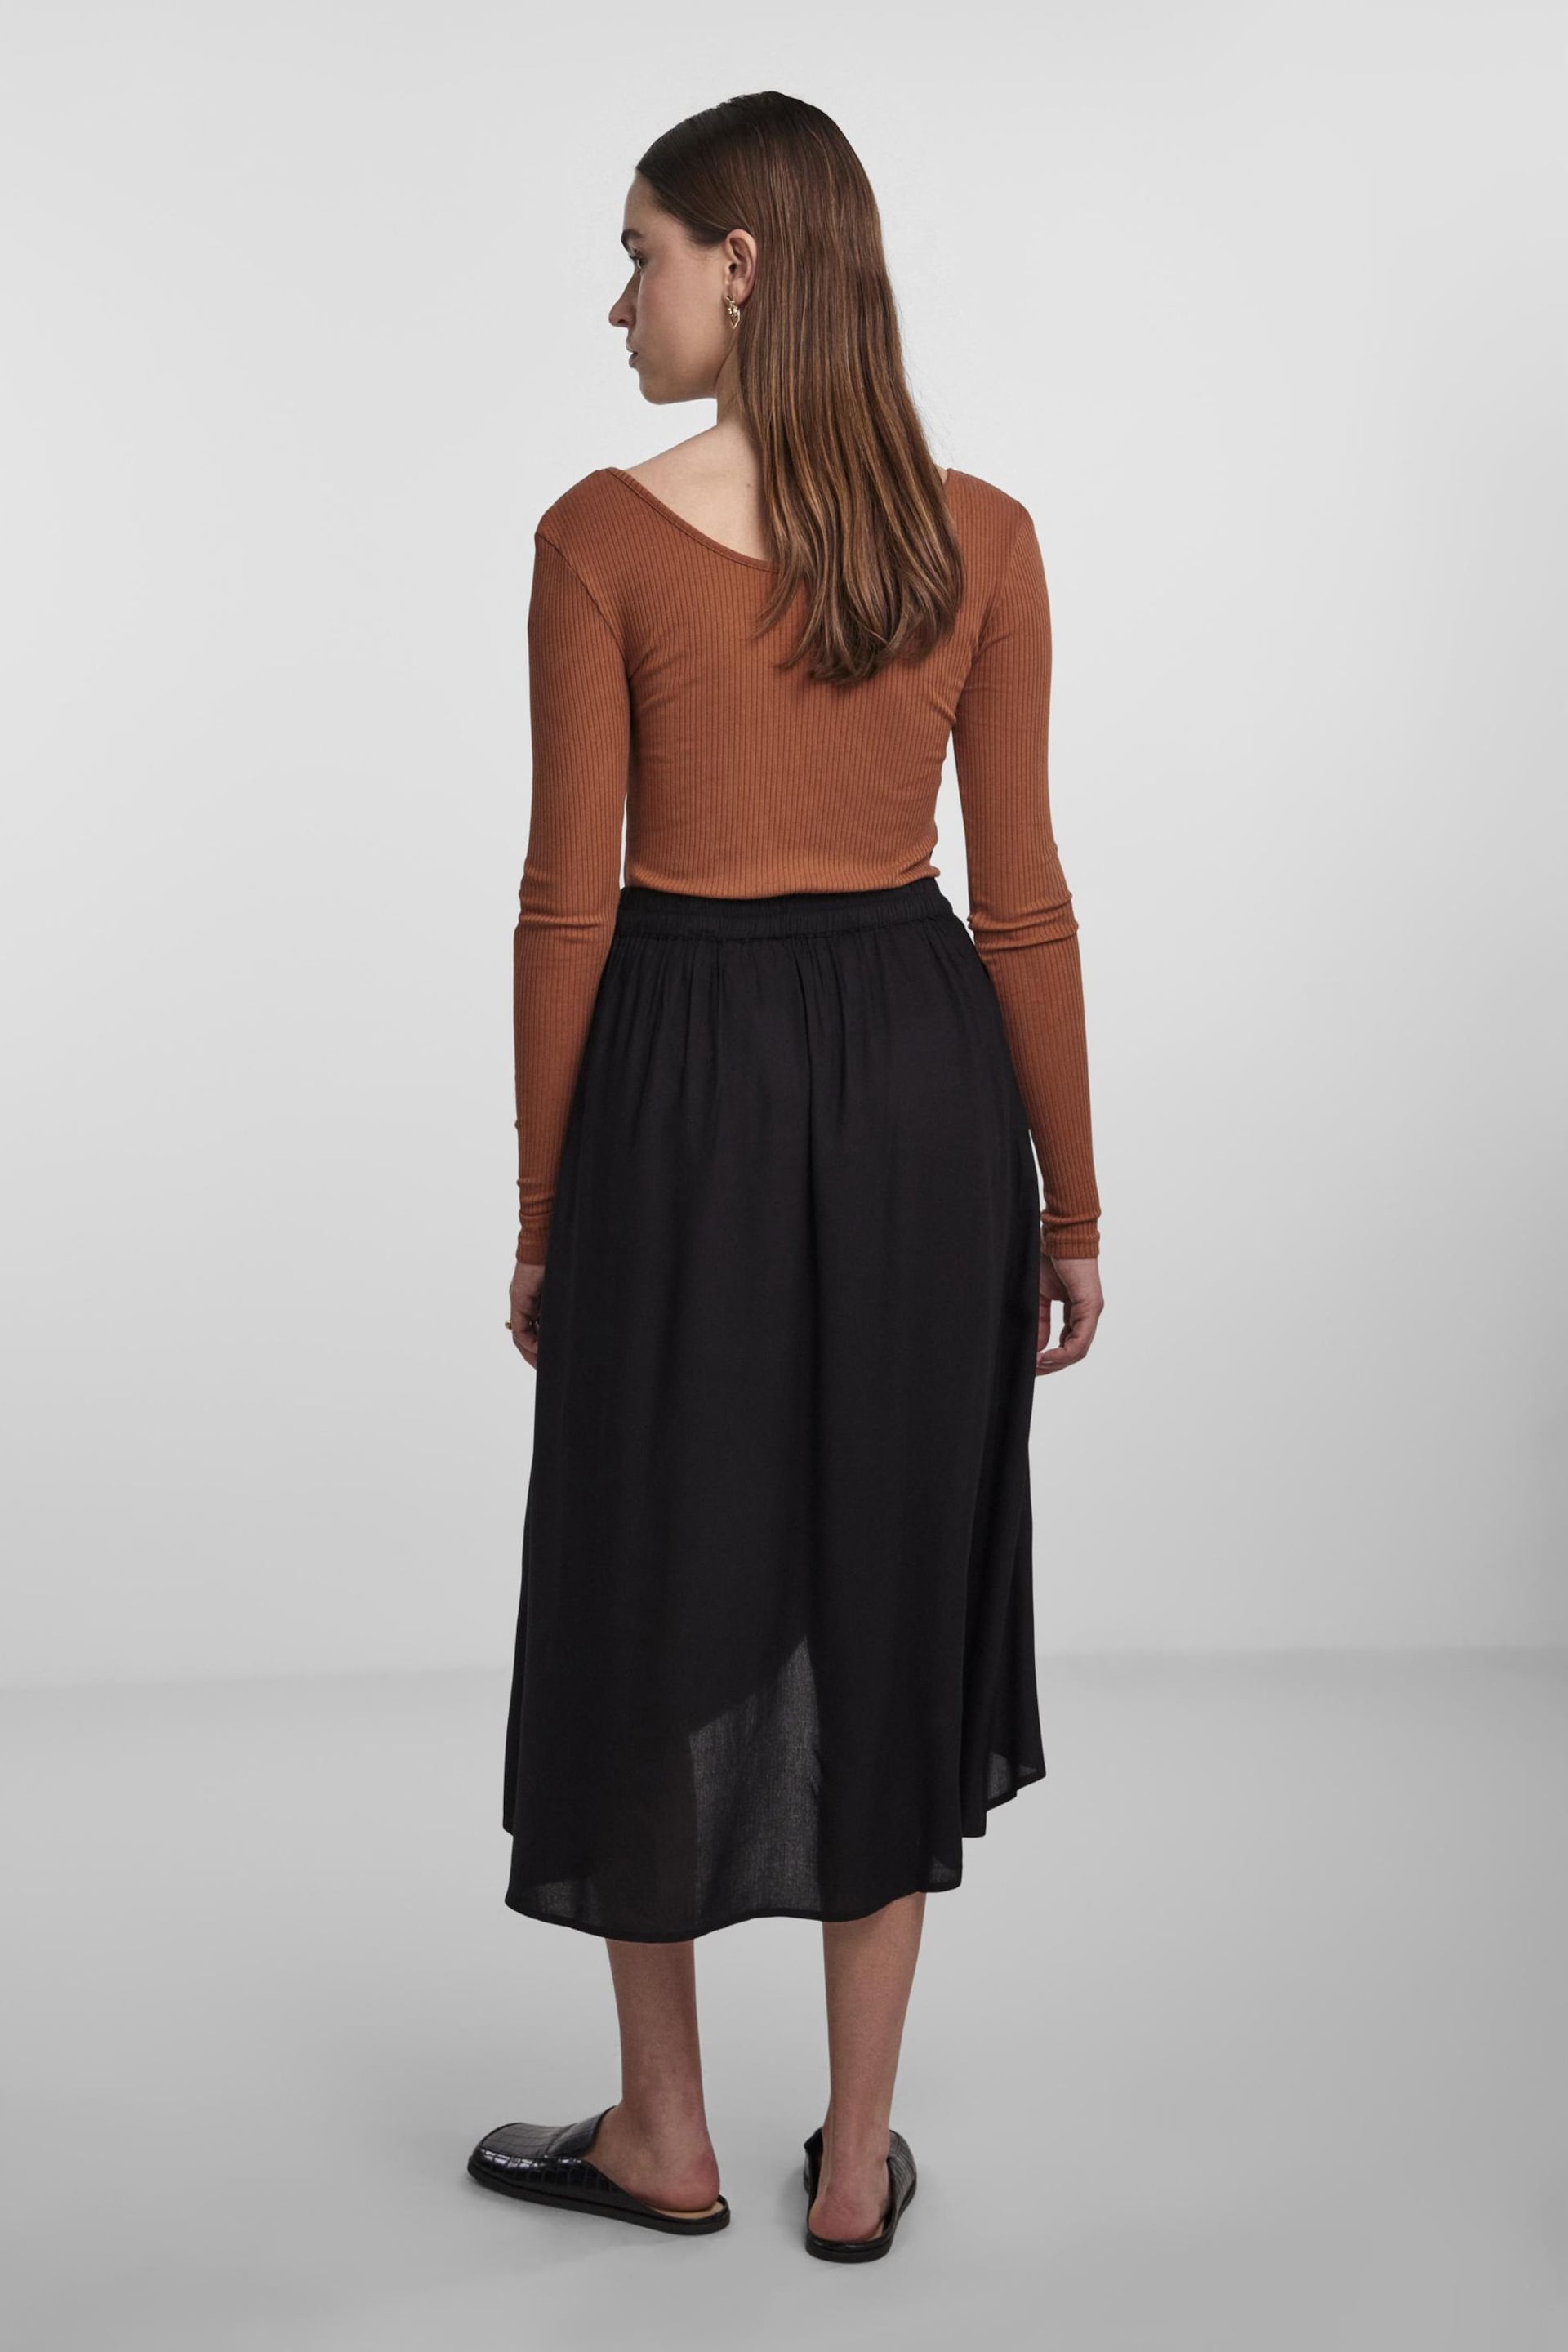 PIECES Black Wrap Midi Skirt - Image 3 of 5